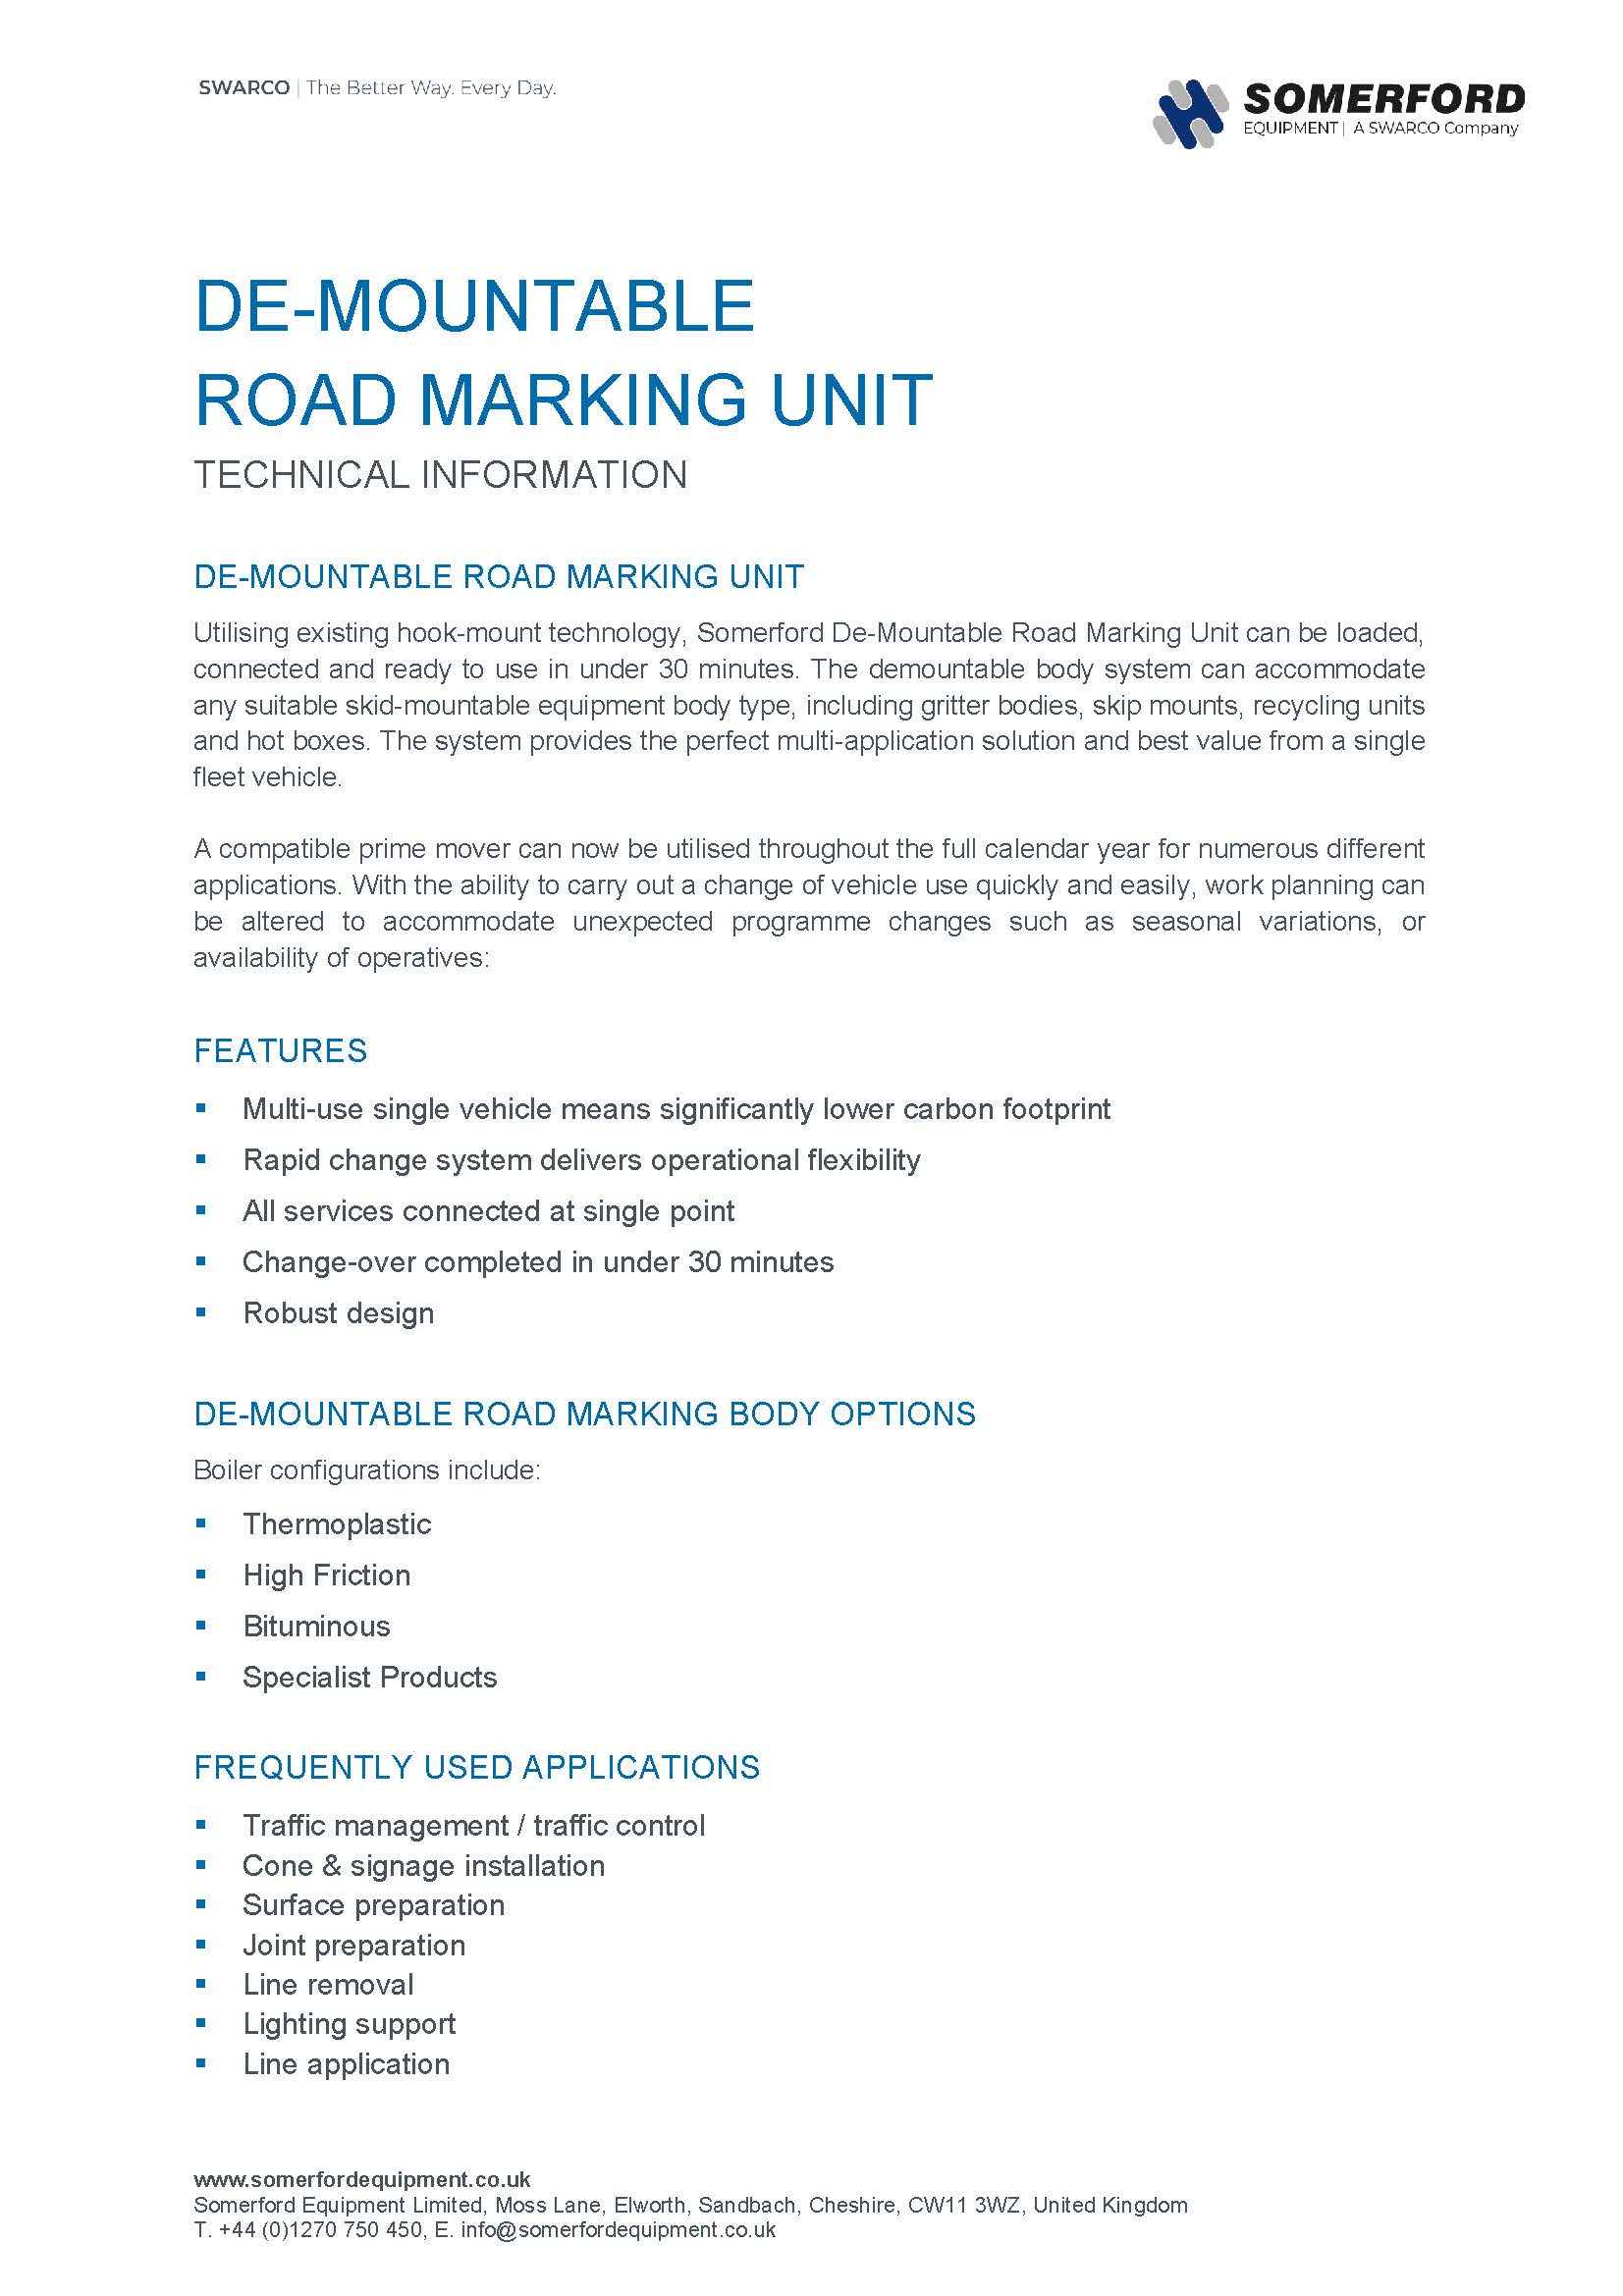 De-Mountable Road Marking Unit